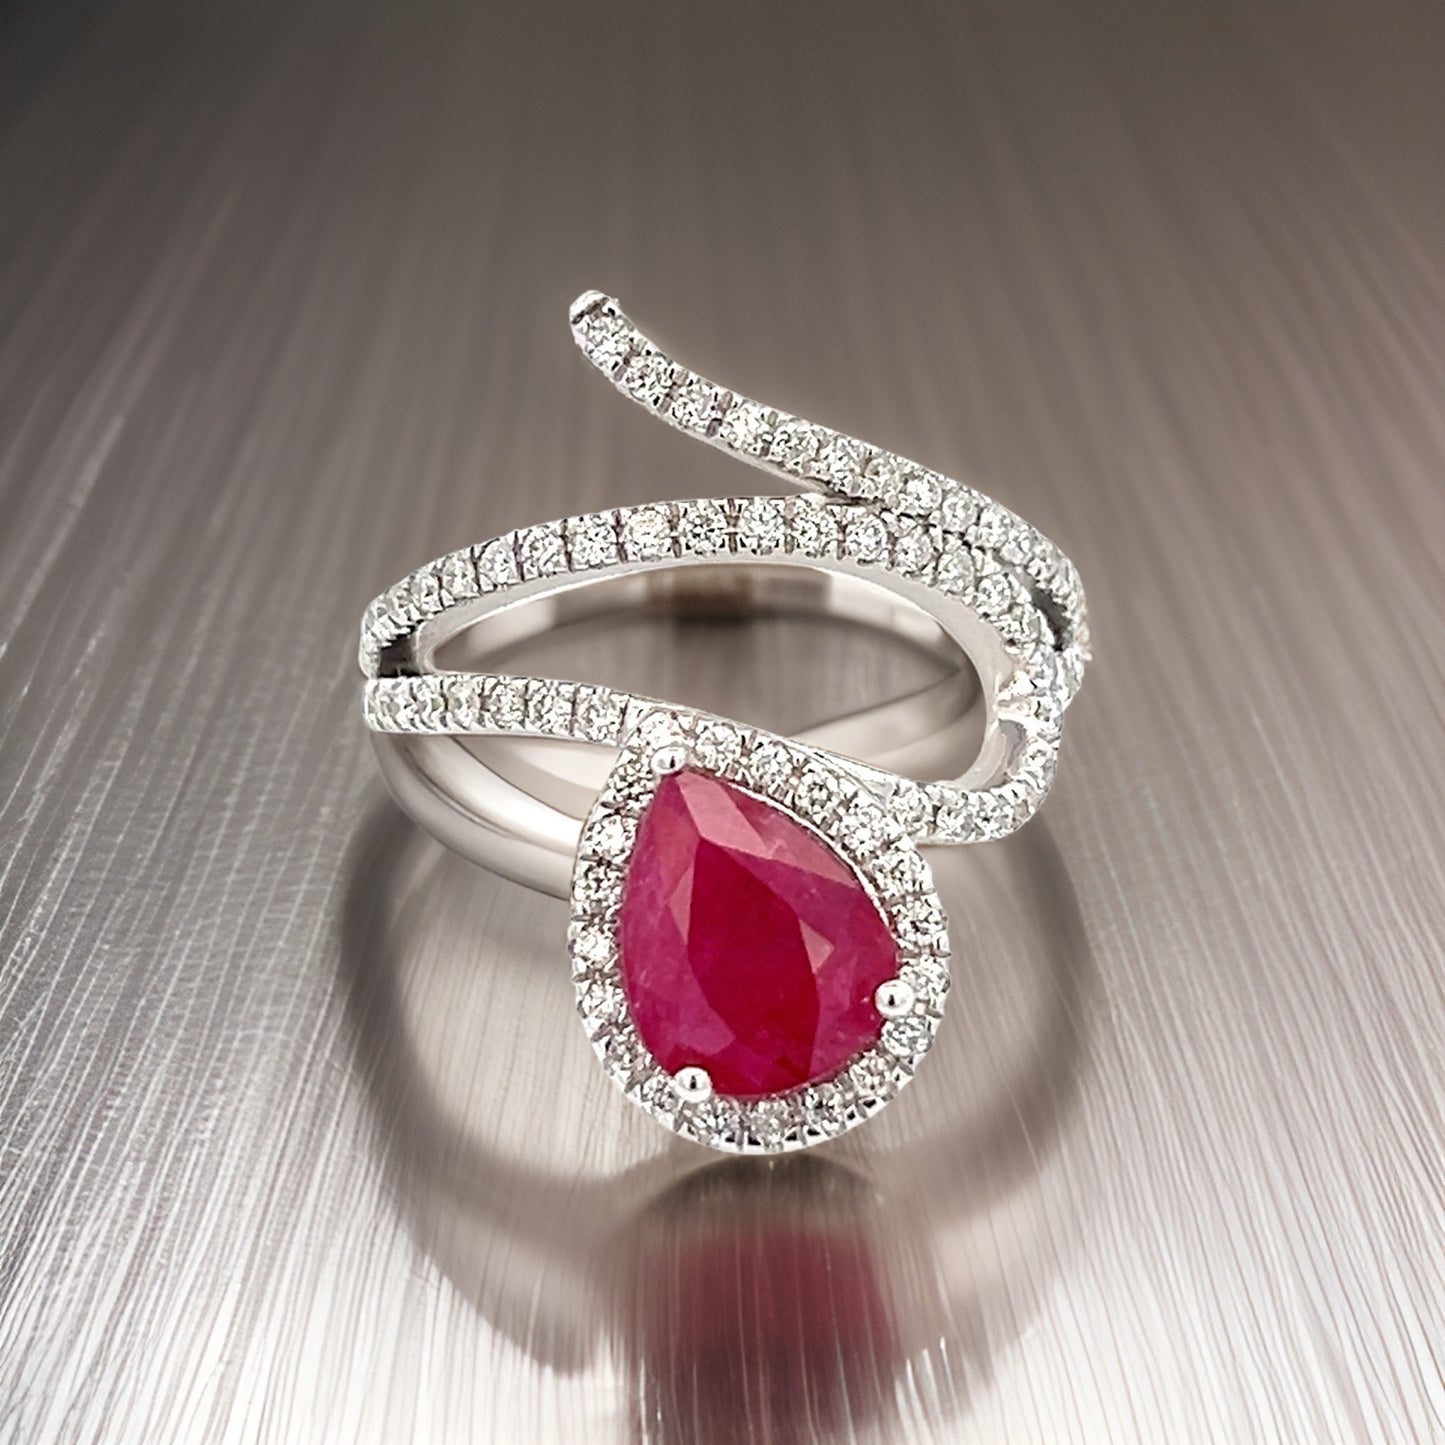 Natural Ruby Diamond Ring 6.75 14k W Gold 2.32 TCW Certified $5,950 310542 - Certified Fine Jewelry